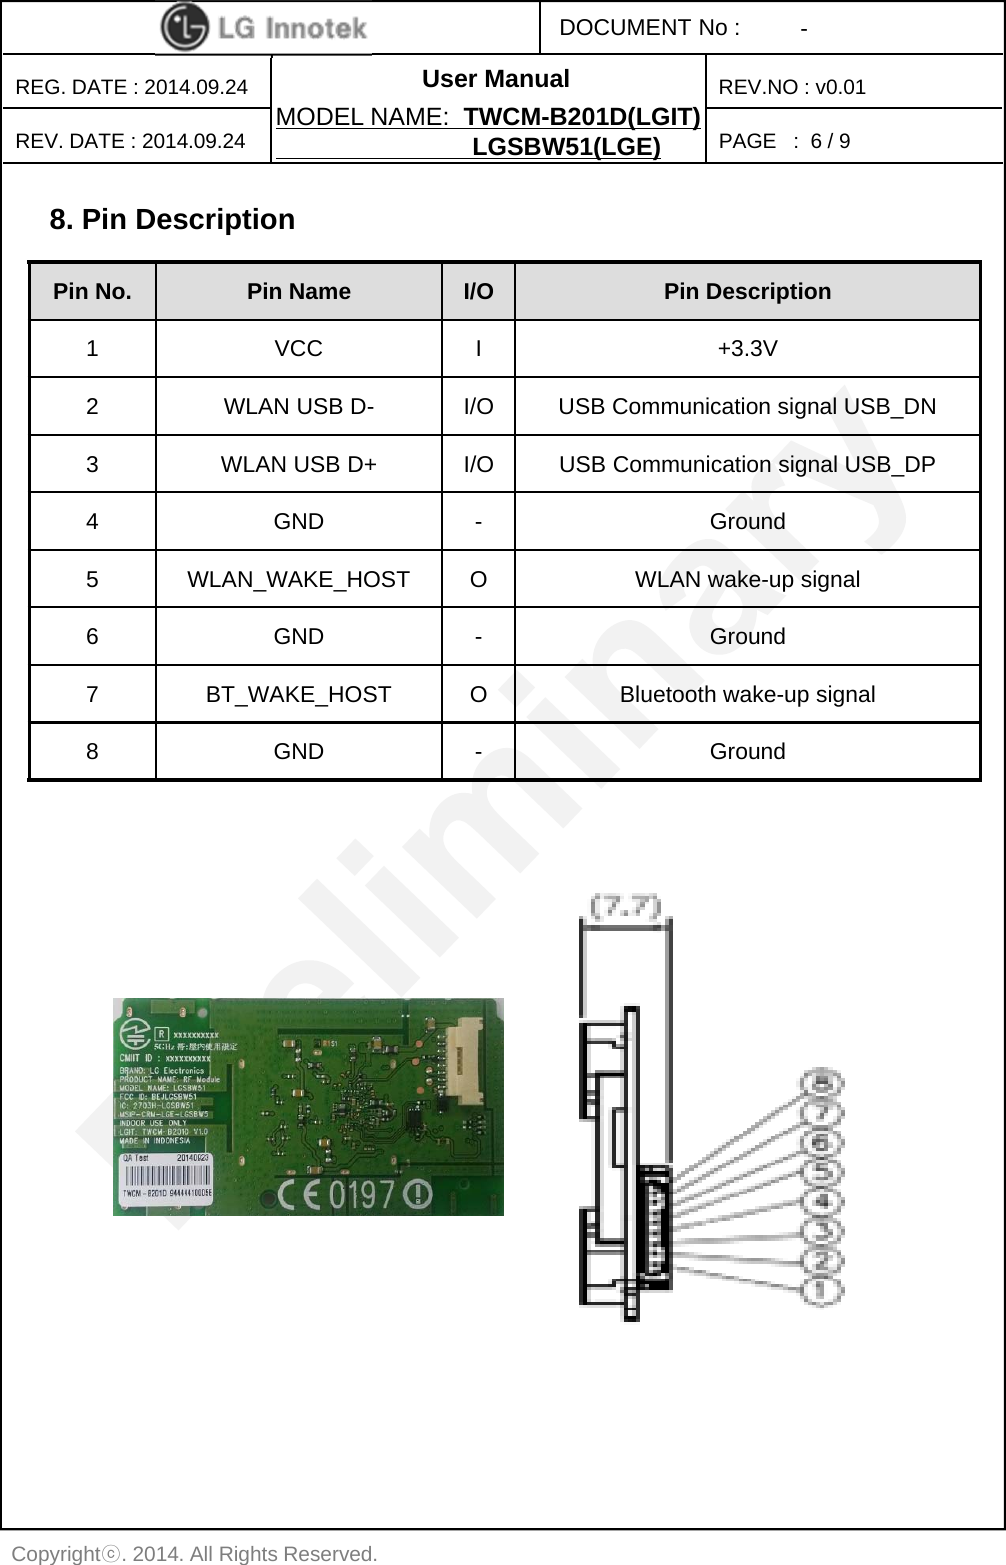 User ManualPAGE   :DOCUMENT No :REG. DATE : 2014.09.24MODEL NAME: TWCM-B201D(LGIT)LGSBW51(LGE)REV. DATE : 2014.09.24REV.NO : v0.01-Copyrightⓒ. 2014. All Rights Reserved.6/ 98. Pin DescriptionPin No. Pin Name I/O Pin Description1 VCC I +3.3V2 WLAN USB D- I/O USB Communication signal USB_DN 3 WLAN USB D+ I/O USB Communication signal USB_DP4 GND - Ground5 WLAN_WAKE_HOST O WLAN wake-up signal6 GND - Ground7 BT_WAKE_HOST O Bluetooth wake-up signal8 GND - Ground